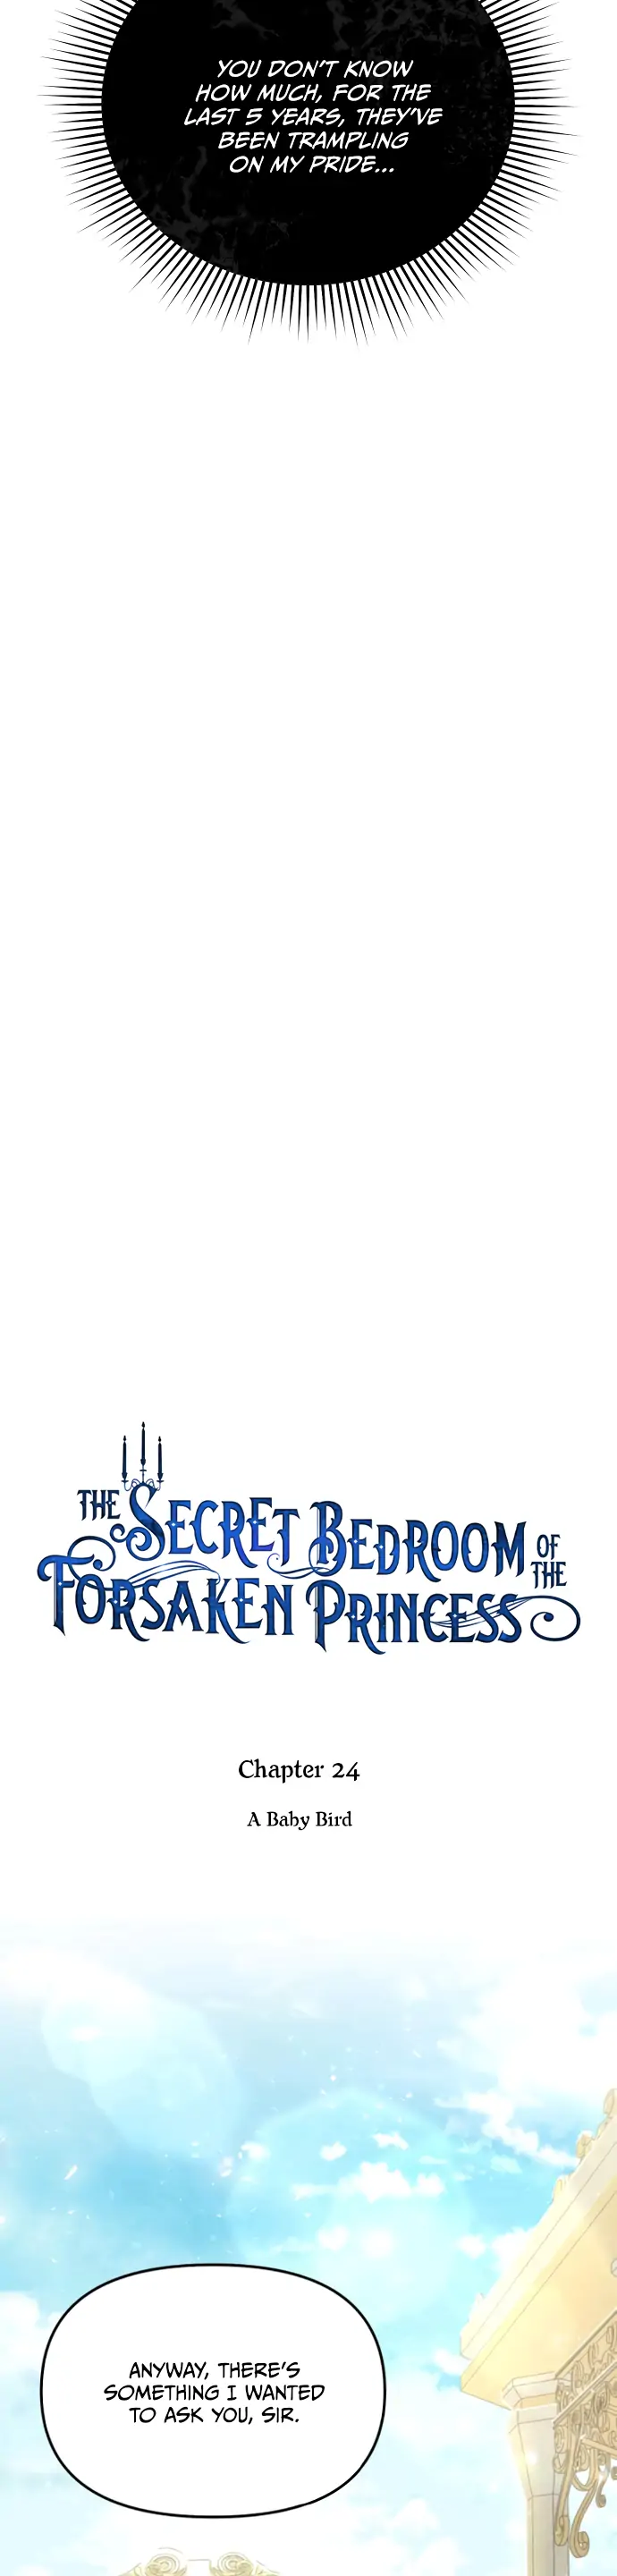 The Secret Bedroom of the Forsaken Princess - Chapter 24 Page 8